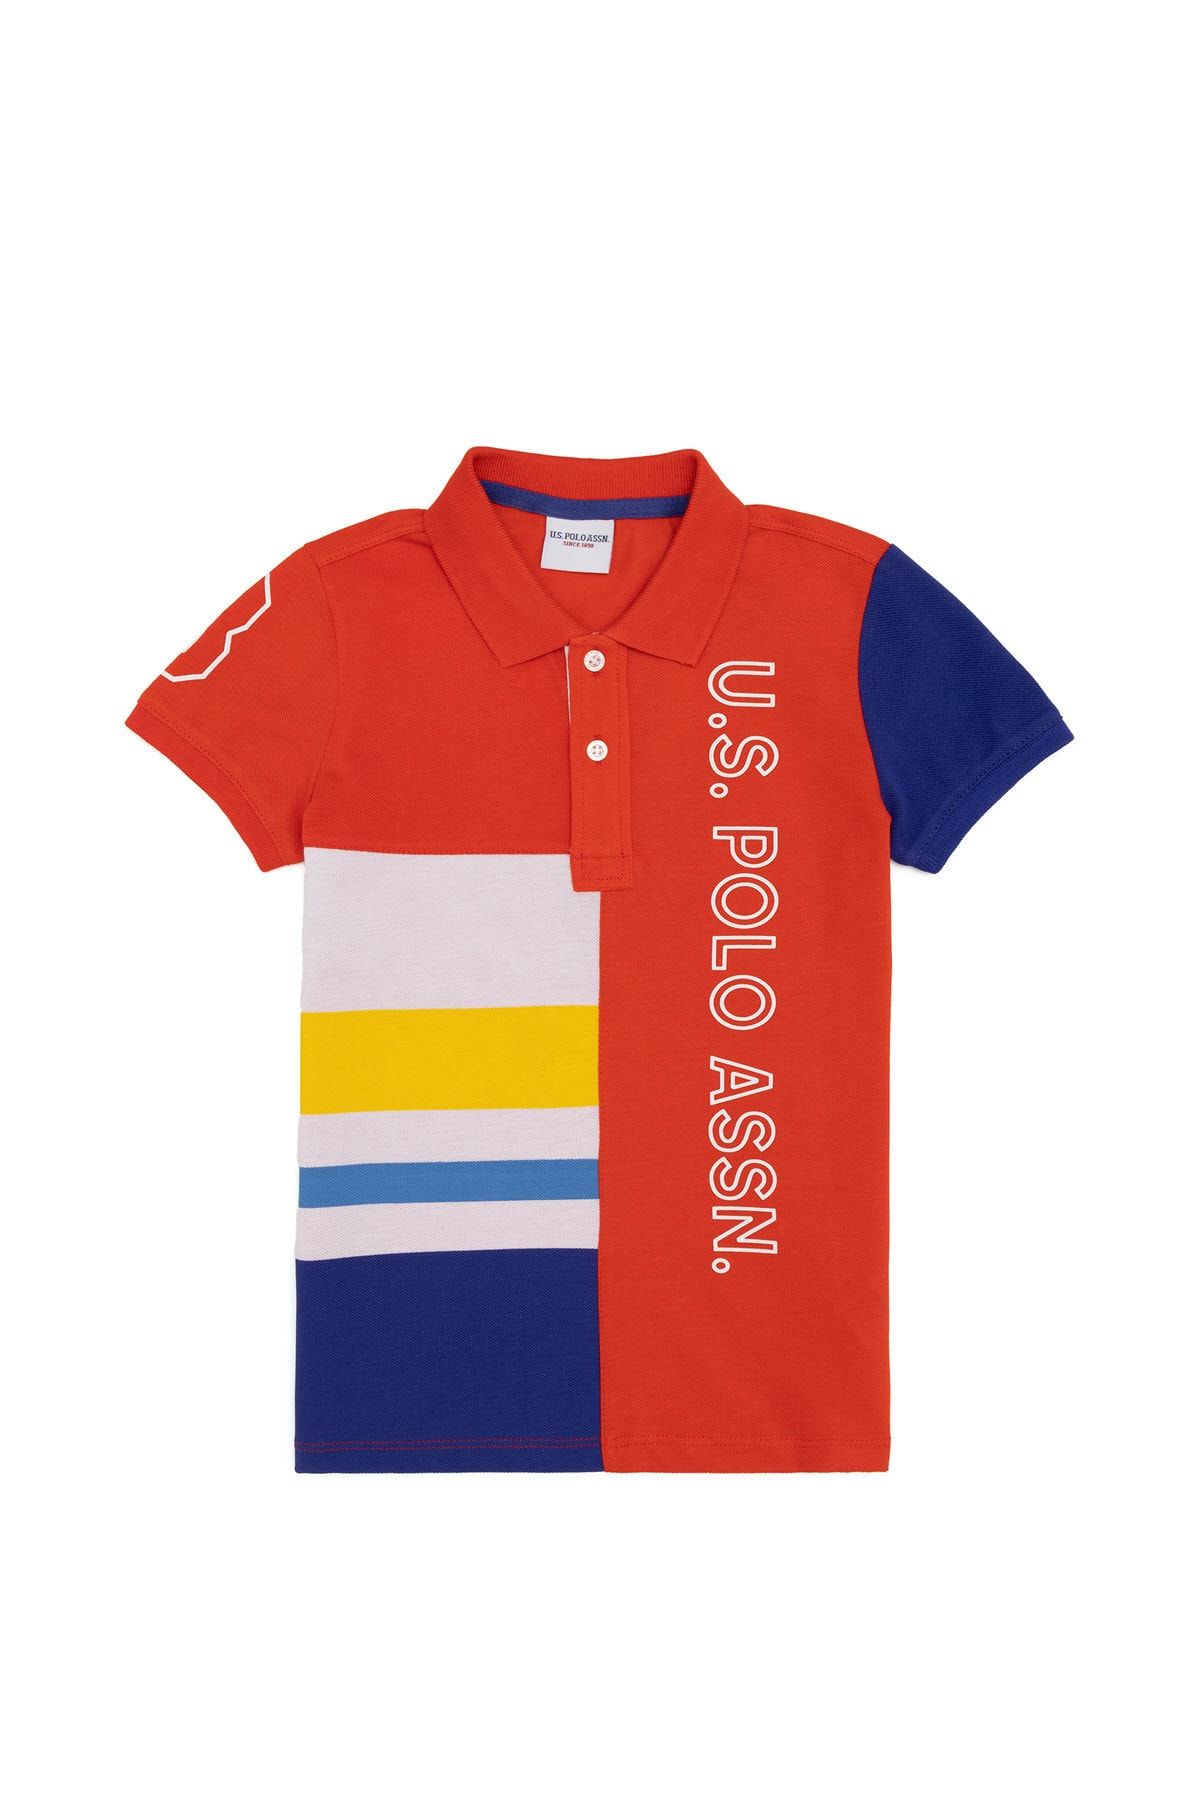 U.S. Polo Assn. Kırmızı Erkek Çocuk T-Shirt